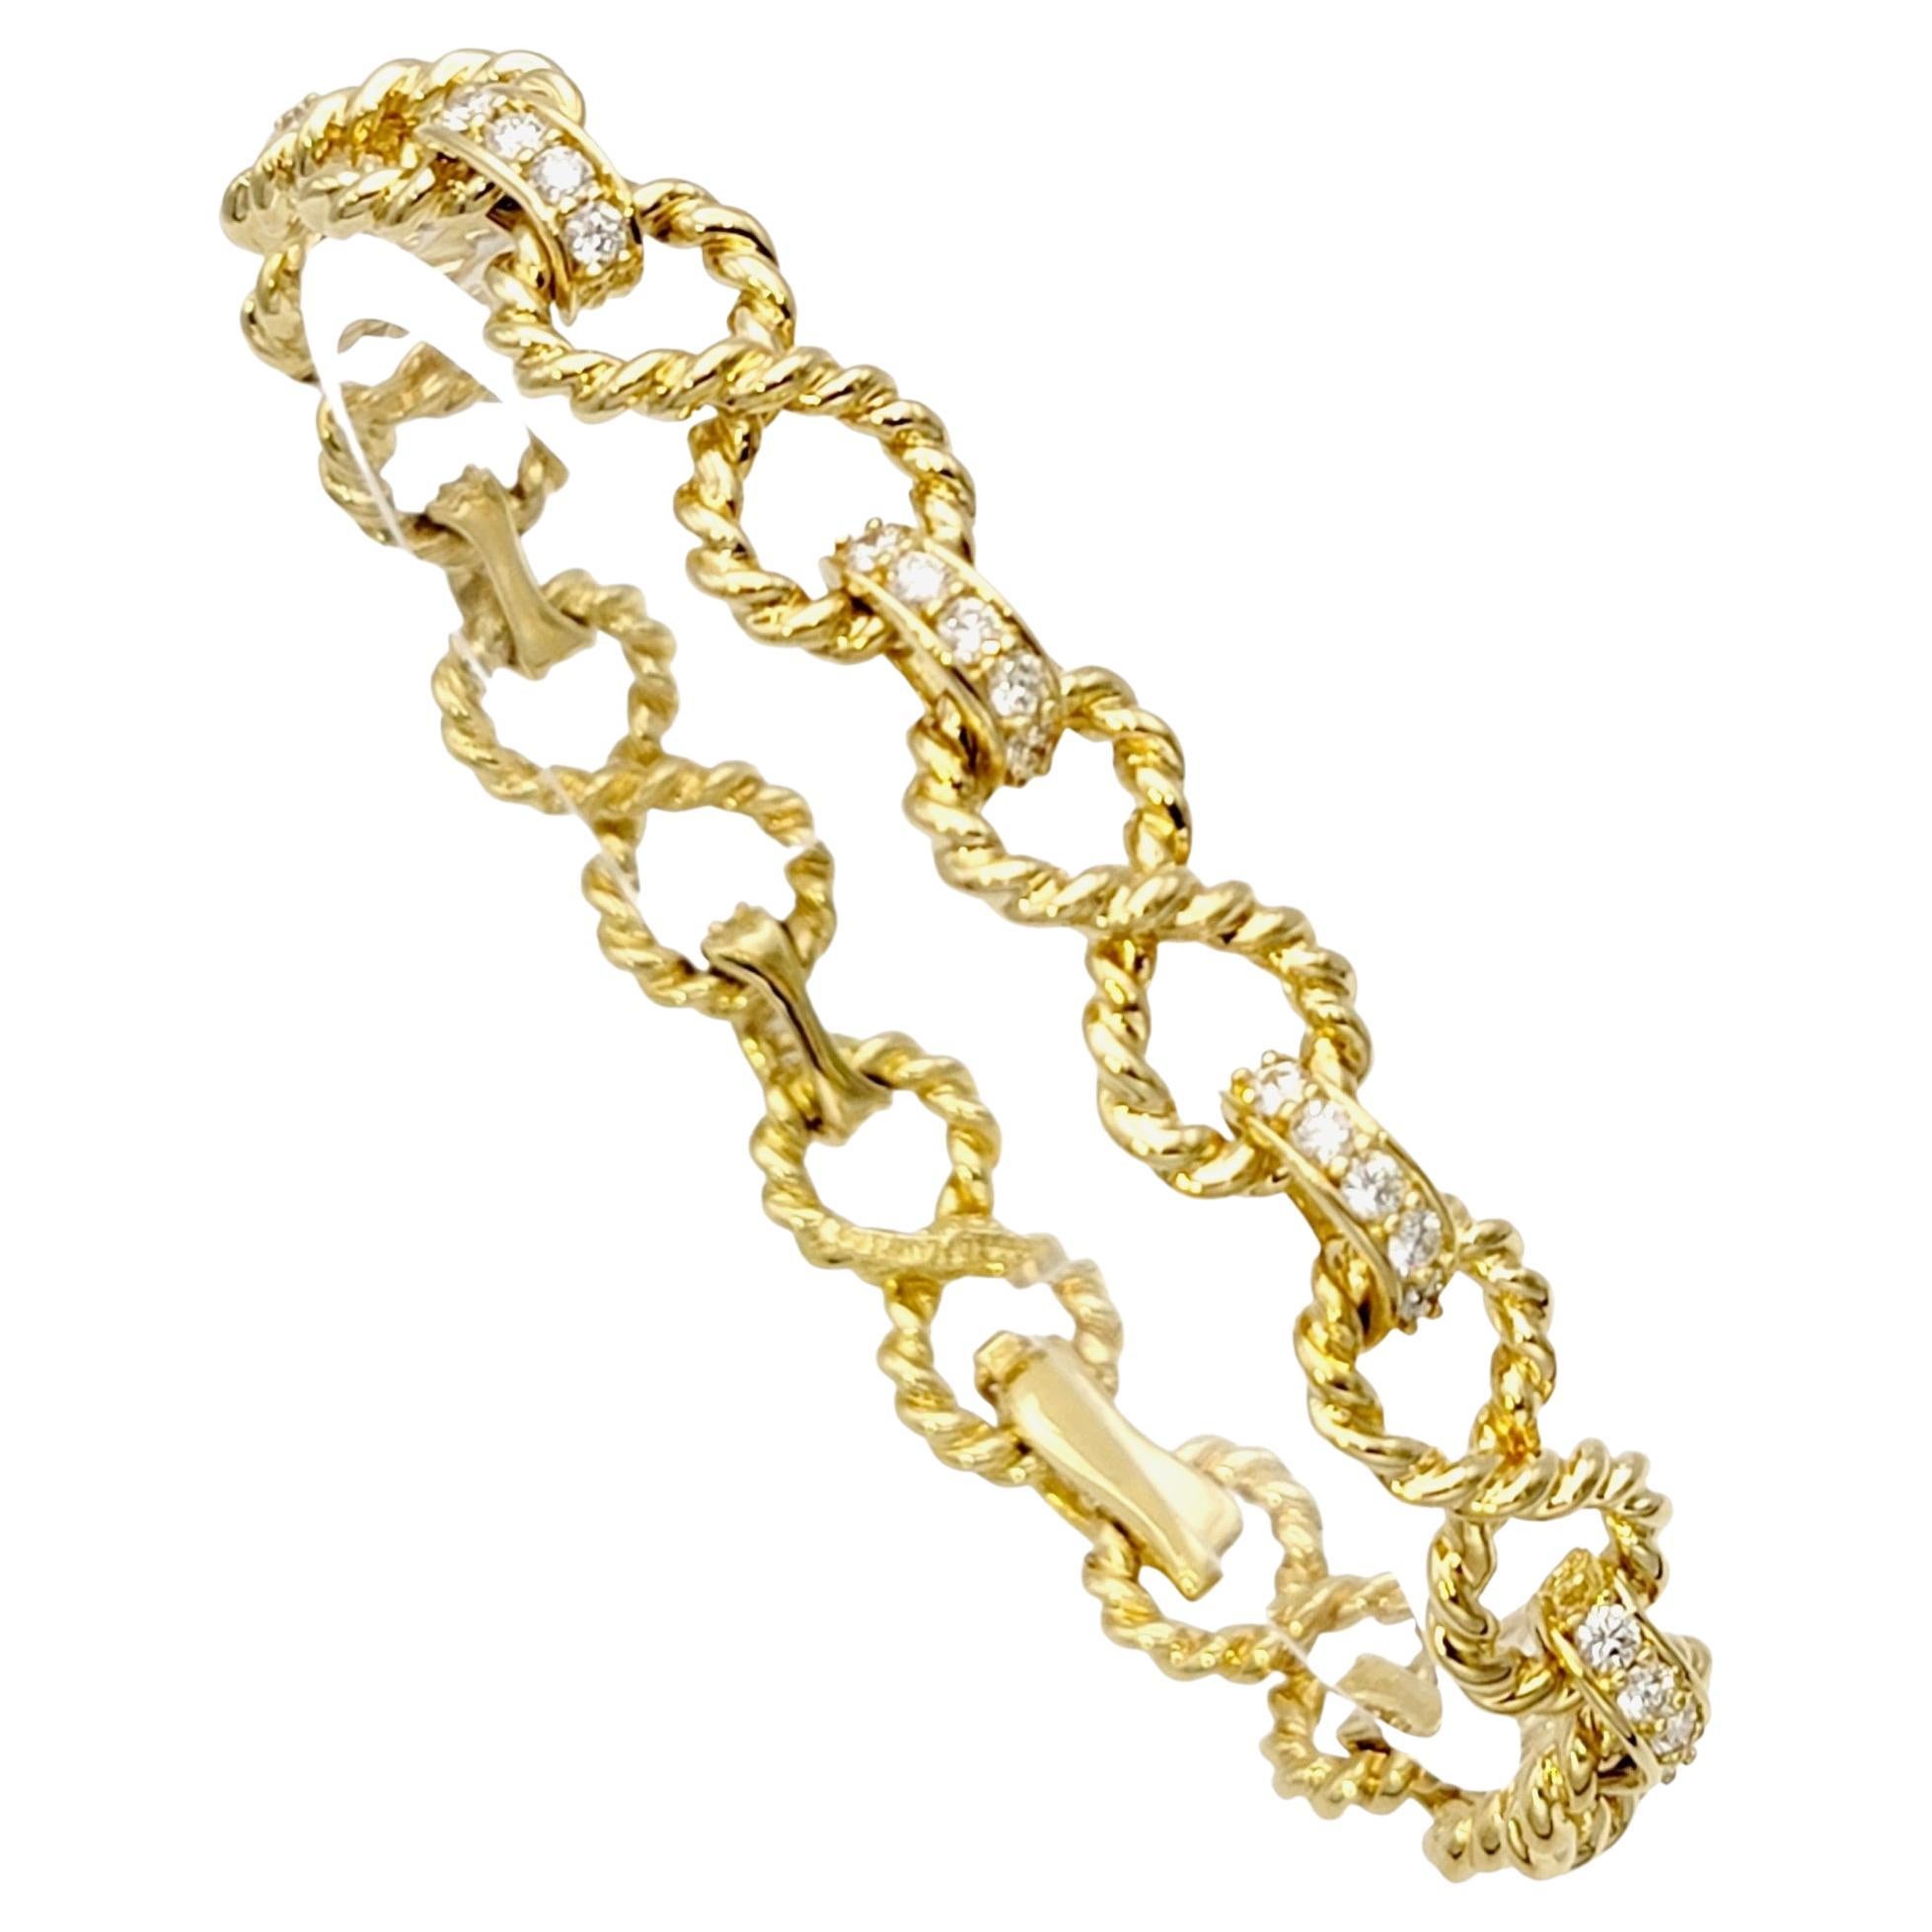 Vintage Tiffany & Co. Infinity Link Bracelet with Diamonds 18 Karat Yellow Gold